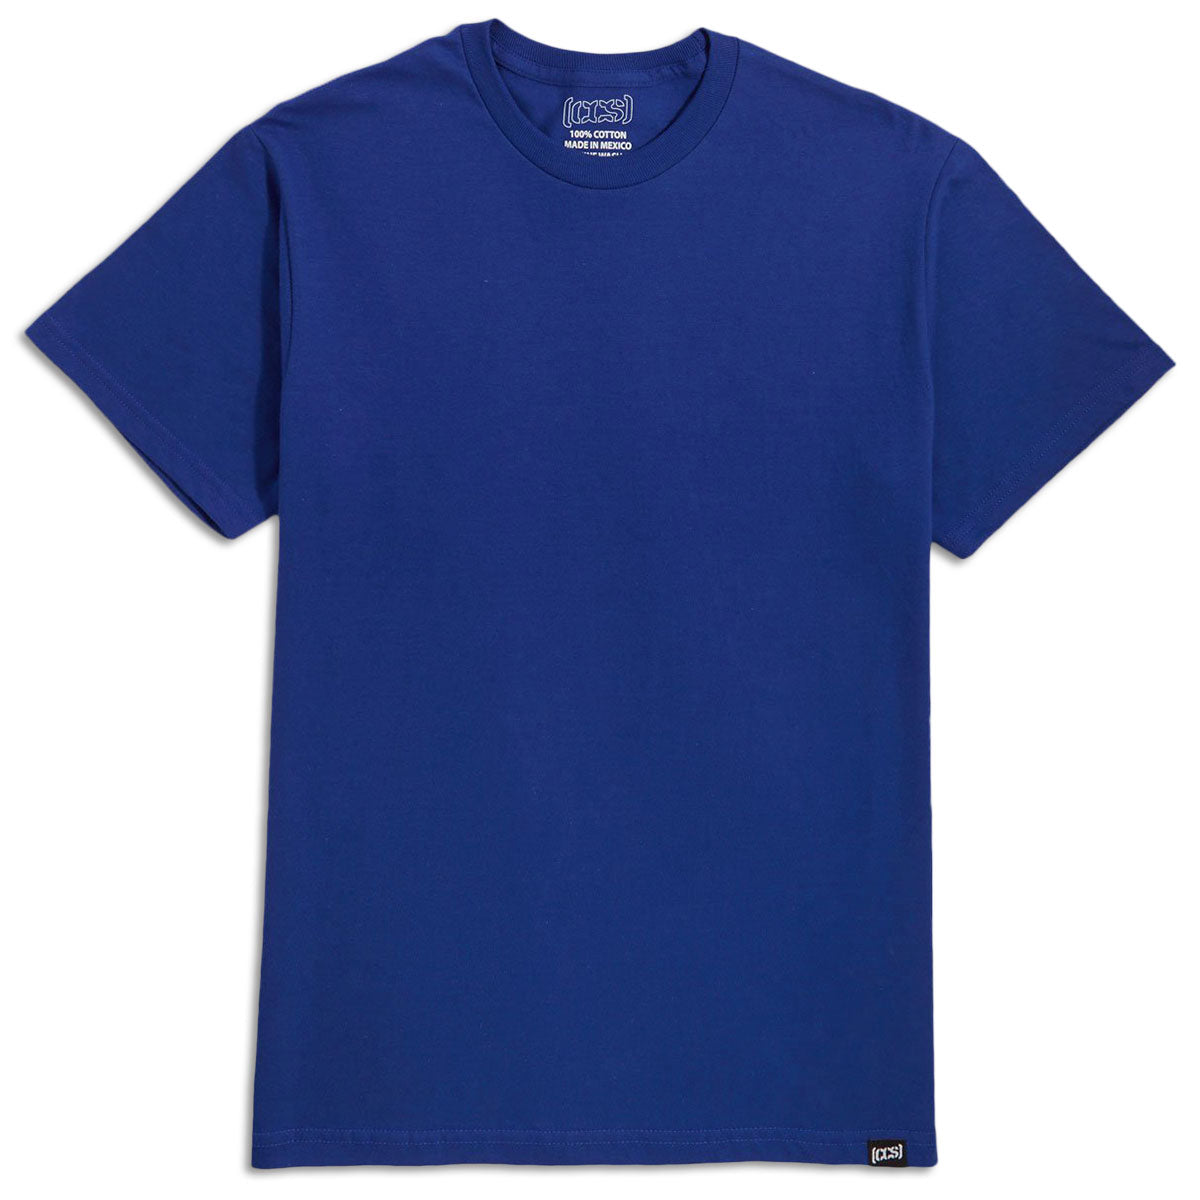 CCS Original Heavyweight T-Shirt - Royal Blue image 1